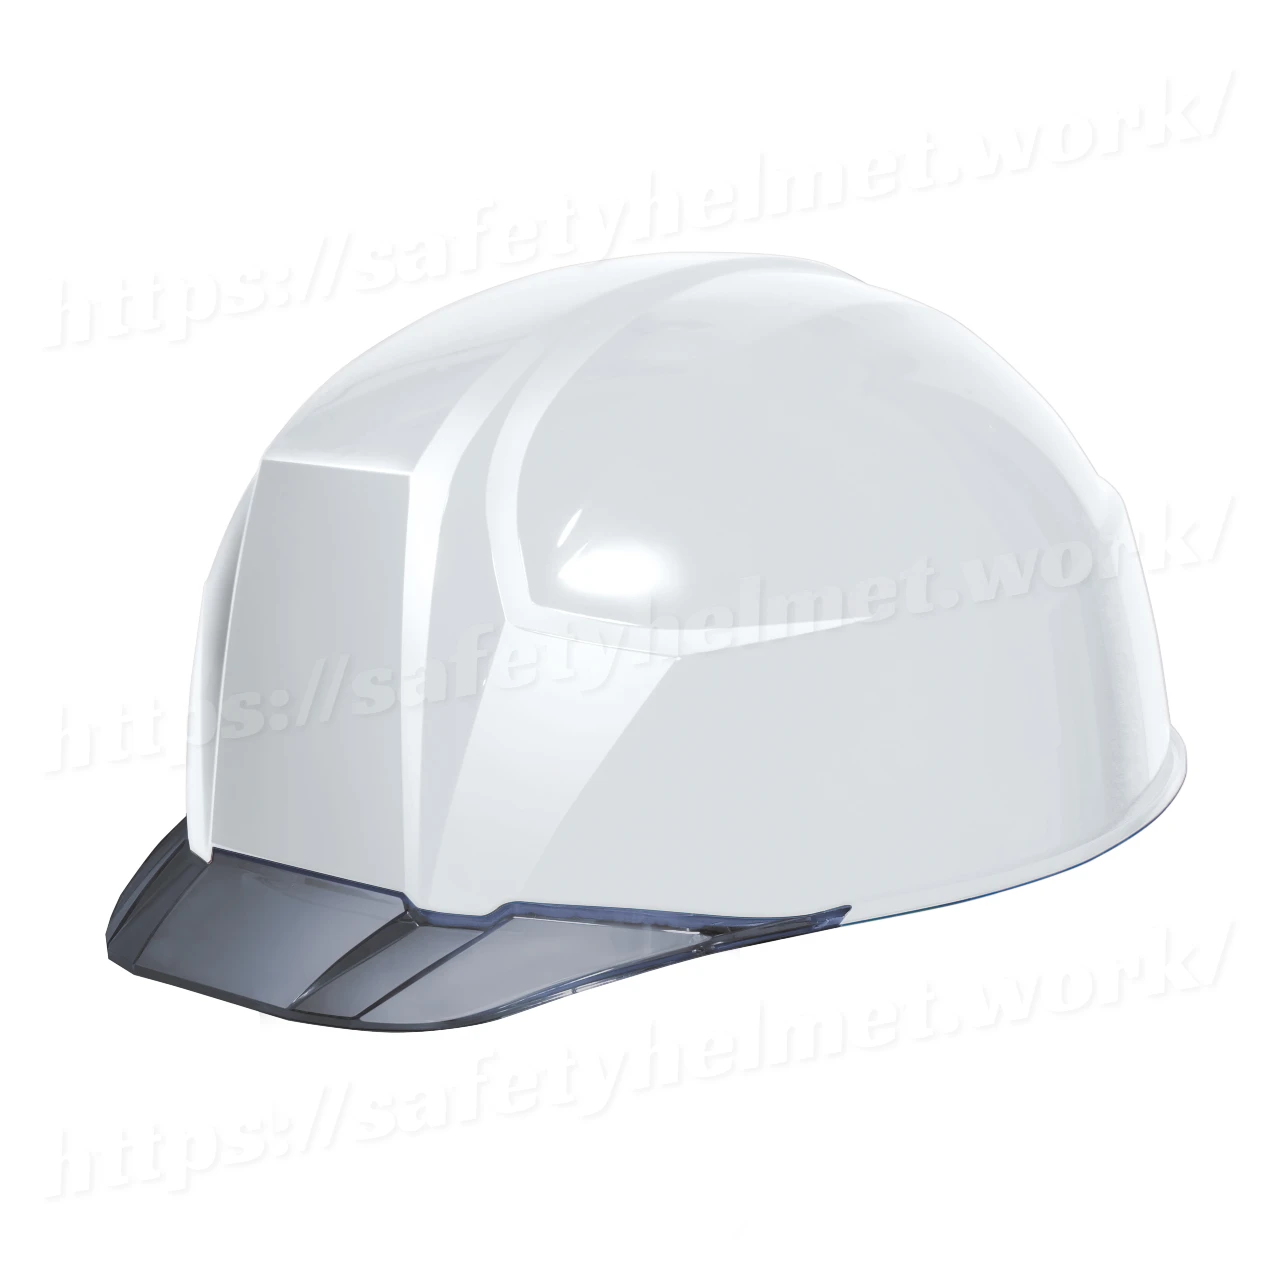 dic-lightest-helmet-keijin-clearvisor-aa23c-white-smoke